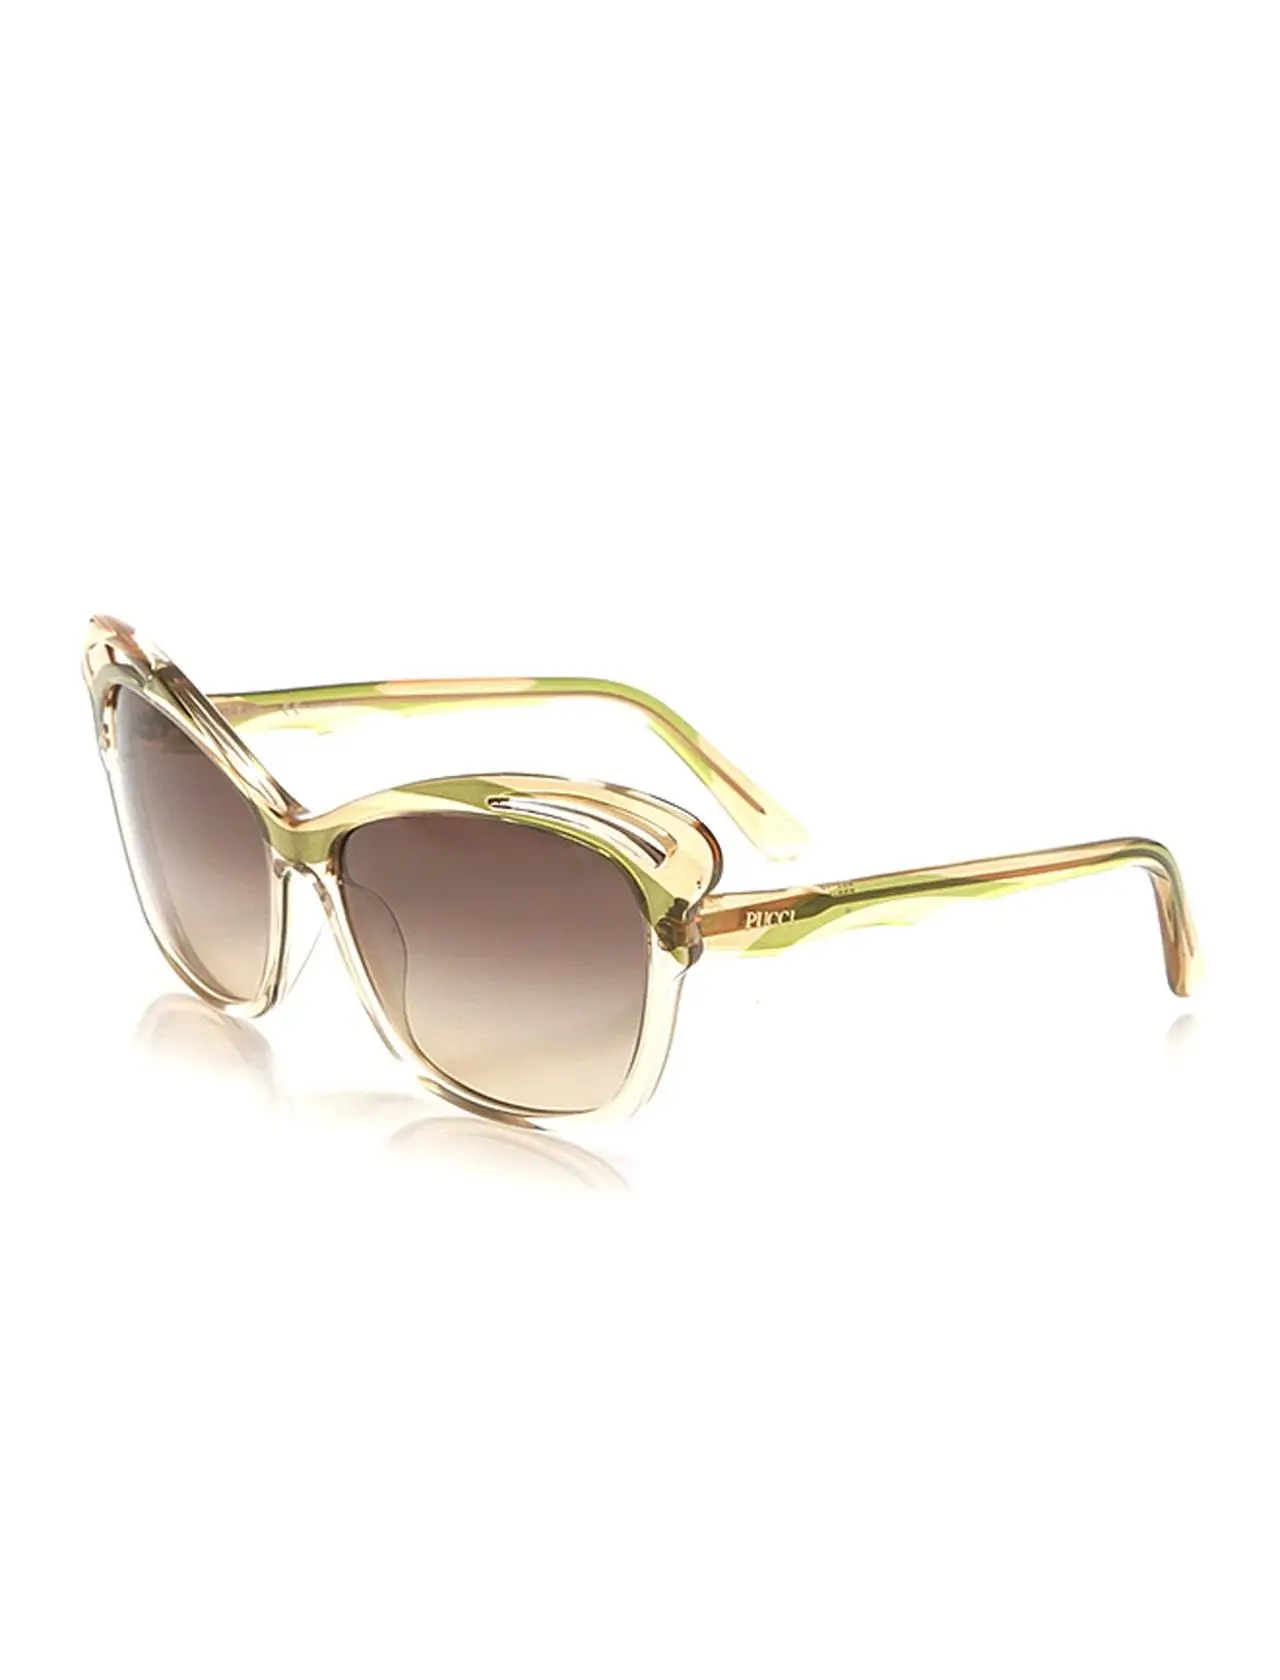 

Women's sunglasses ep 712 278 bone cream organic butterfly cat eye 57-15-135 emilio pucci